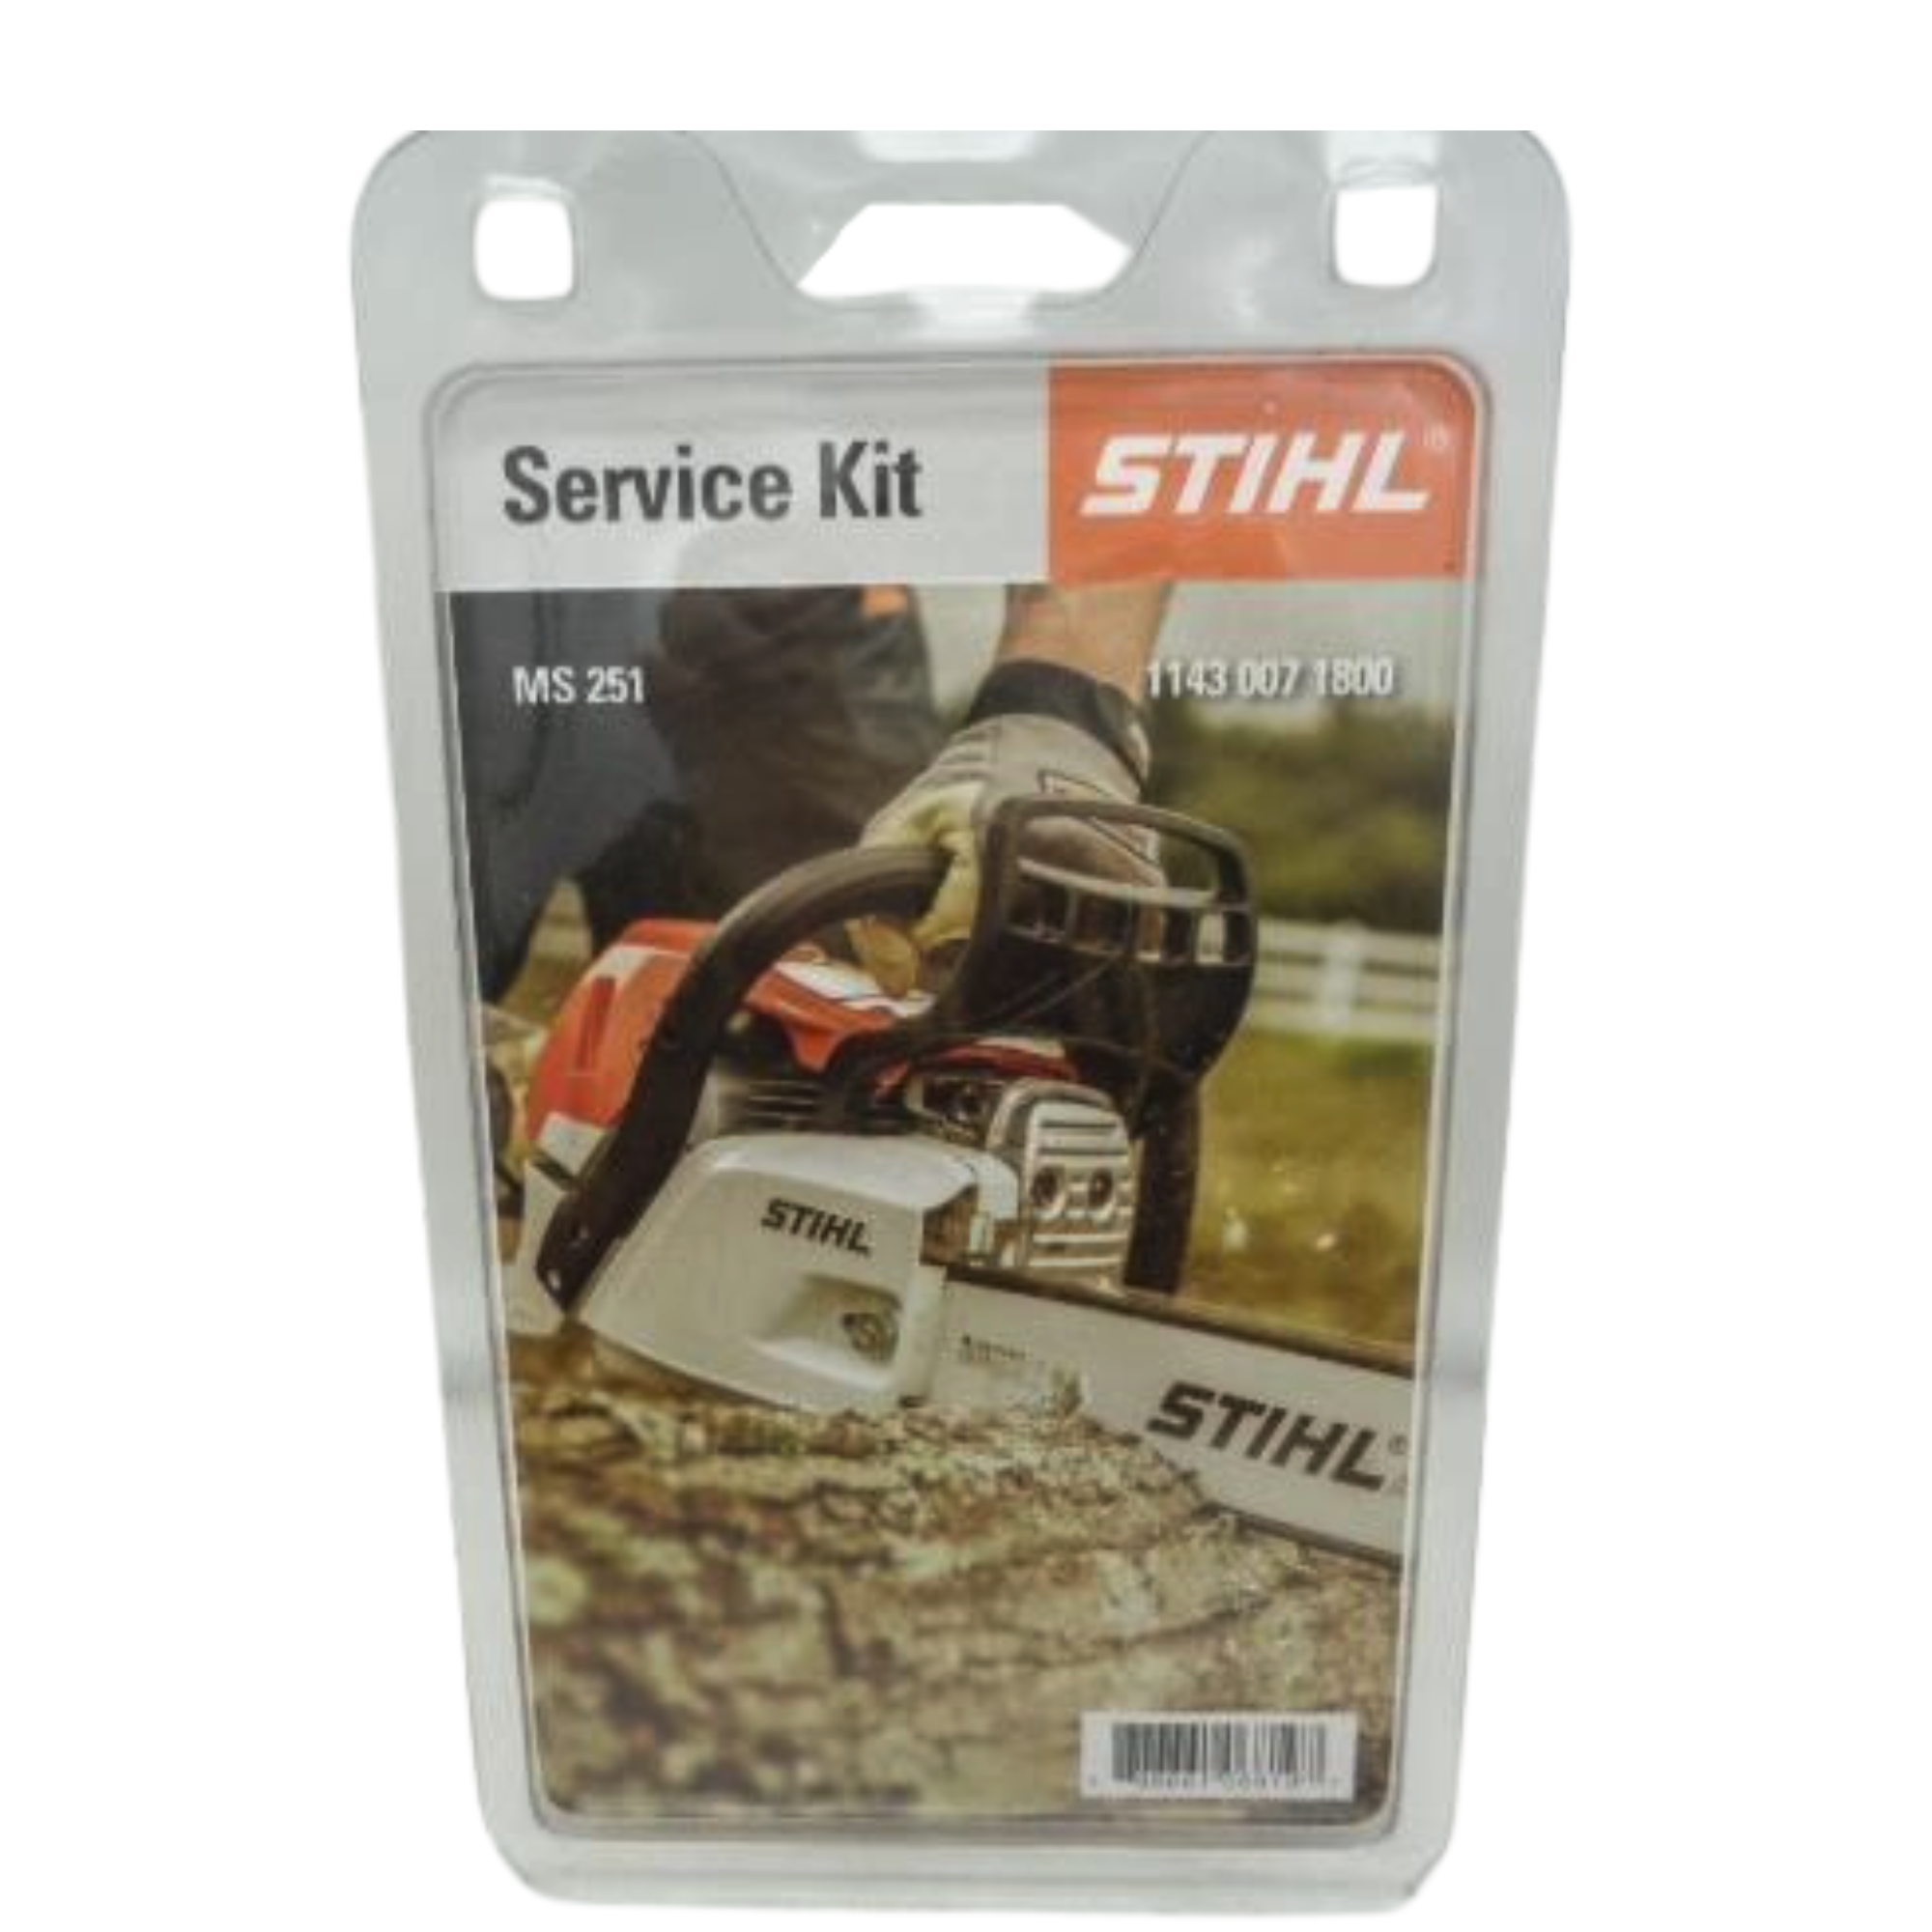 STIHL Chainsaw Service Kit 1143 Series | 1143 007 1800